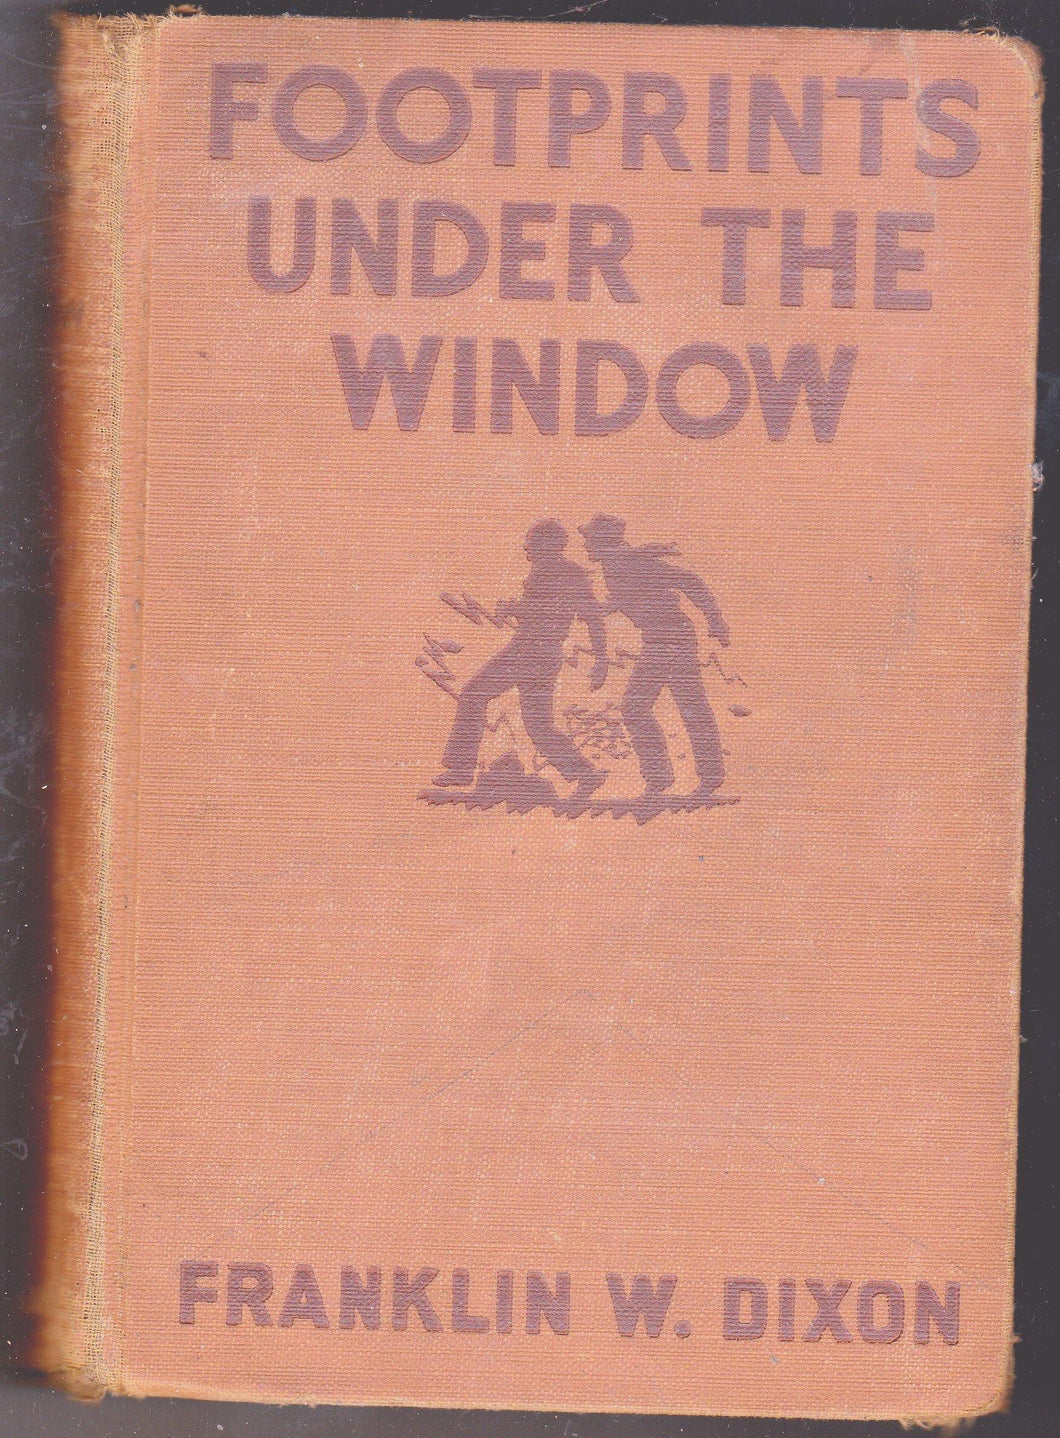 The Hardy Boys Footprints Under The Window Franklin W Dixon 1933 - TulipStuff